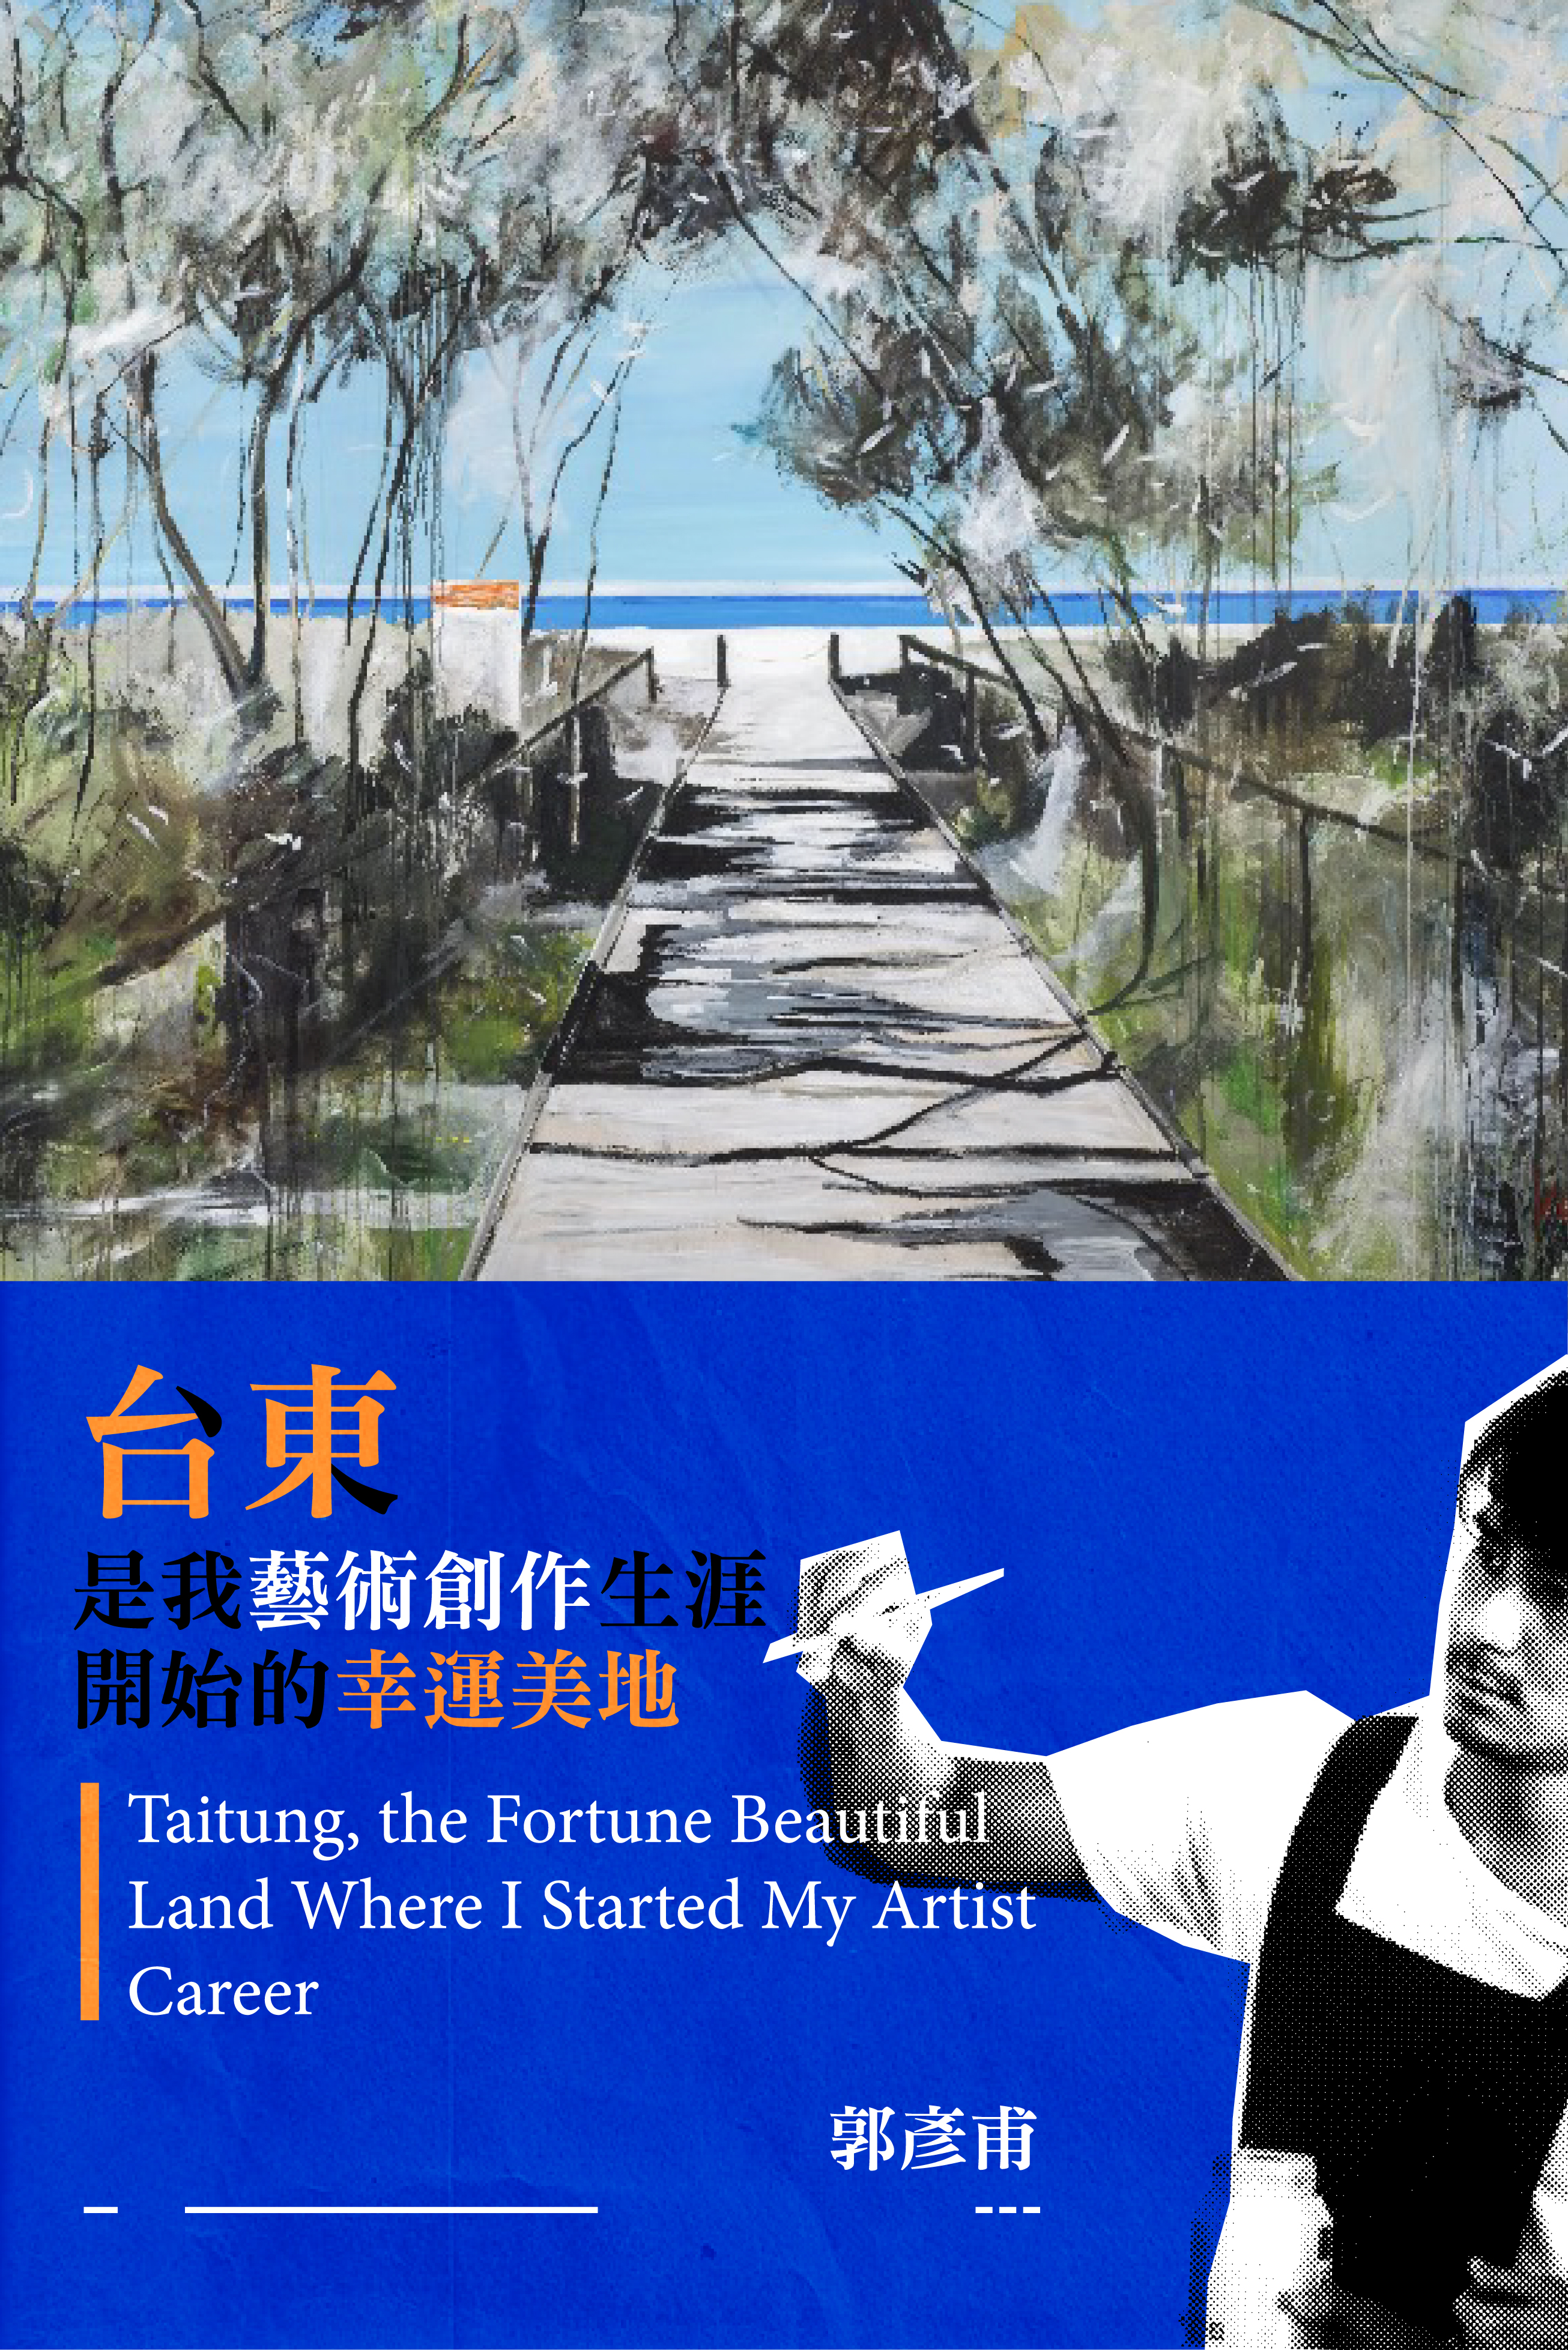 台東是我藝術創作生涯開始的幸運美地    Taitung, the Fortune Beautiful Land Where I Started My Artist Career